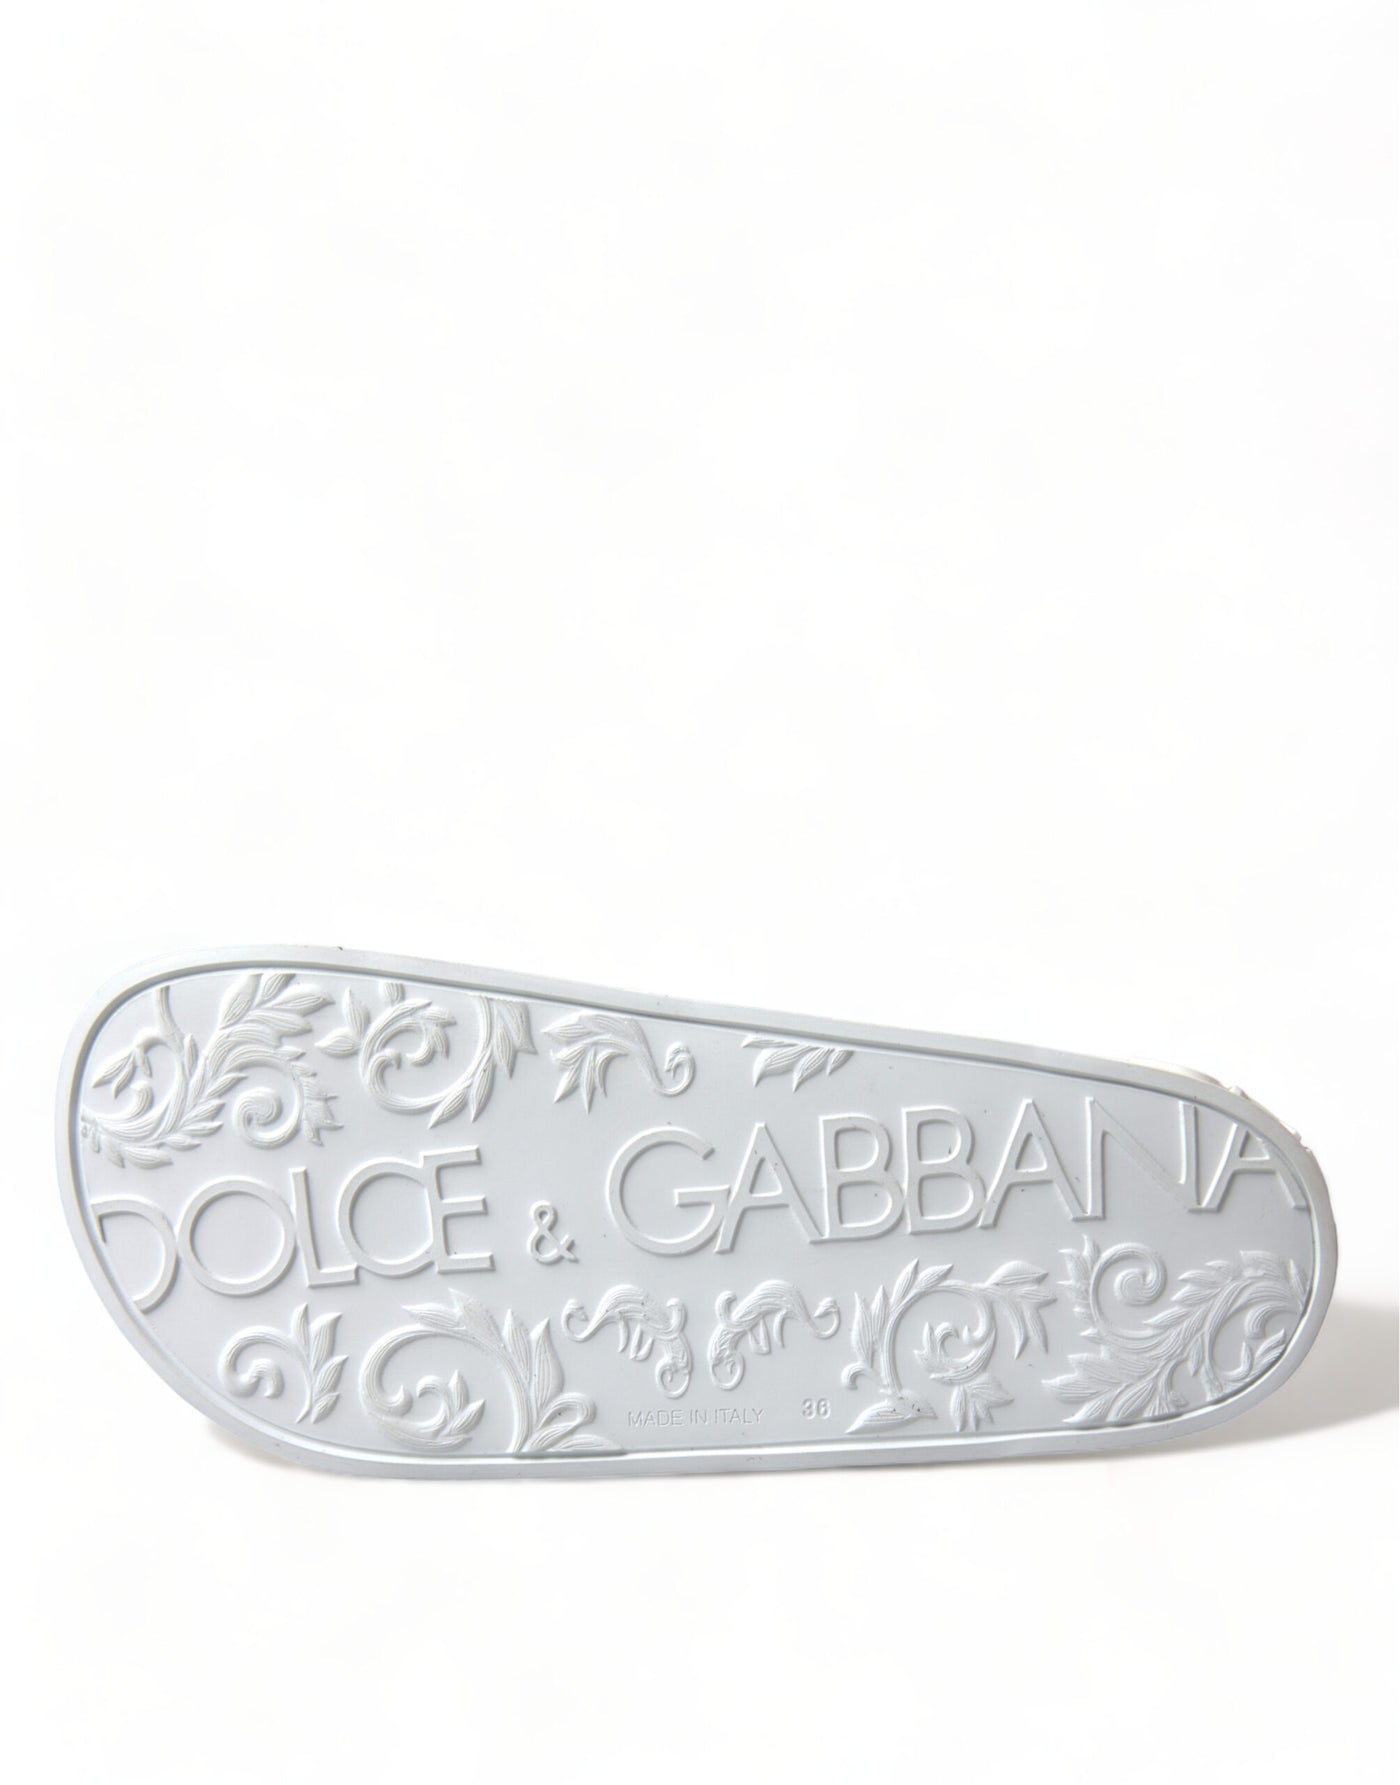 Dolce & Gabbana White Rubber Sandals Slides Beachwear Shoes